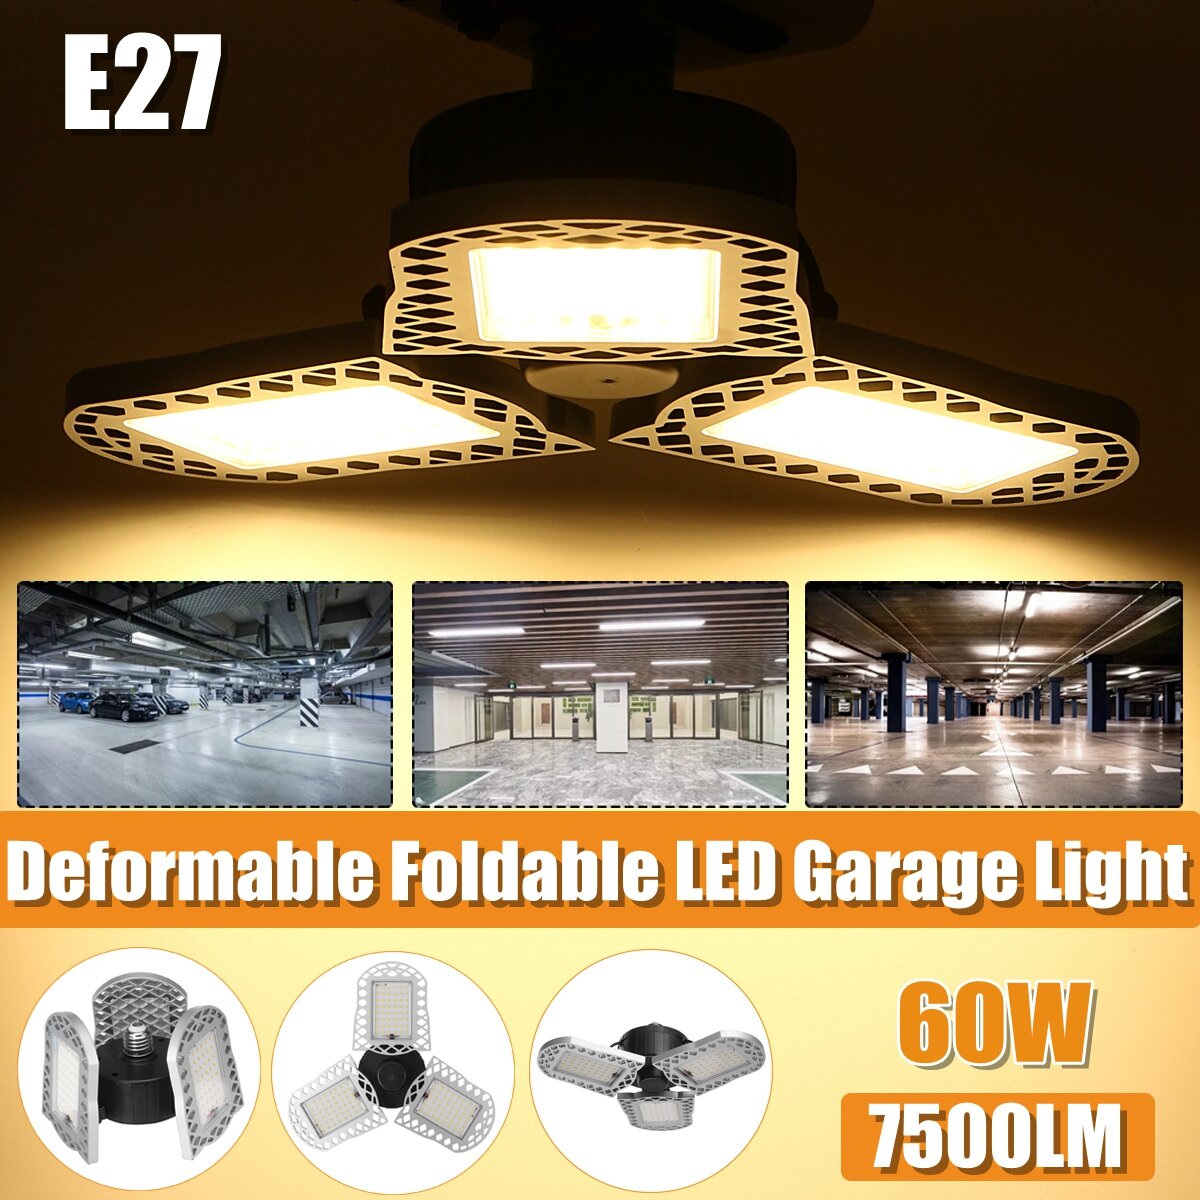 

60W LED Garage E27 Light Bulb Deformable Ceiling Fixture Lights Shop Workshop Lamp